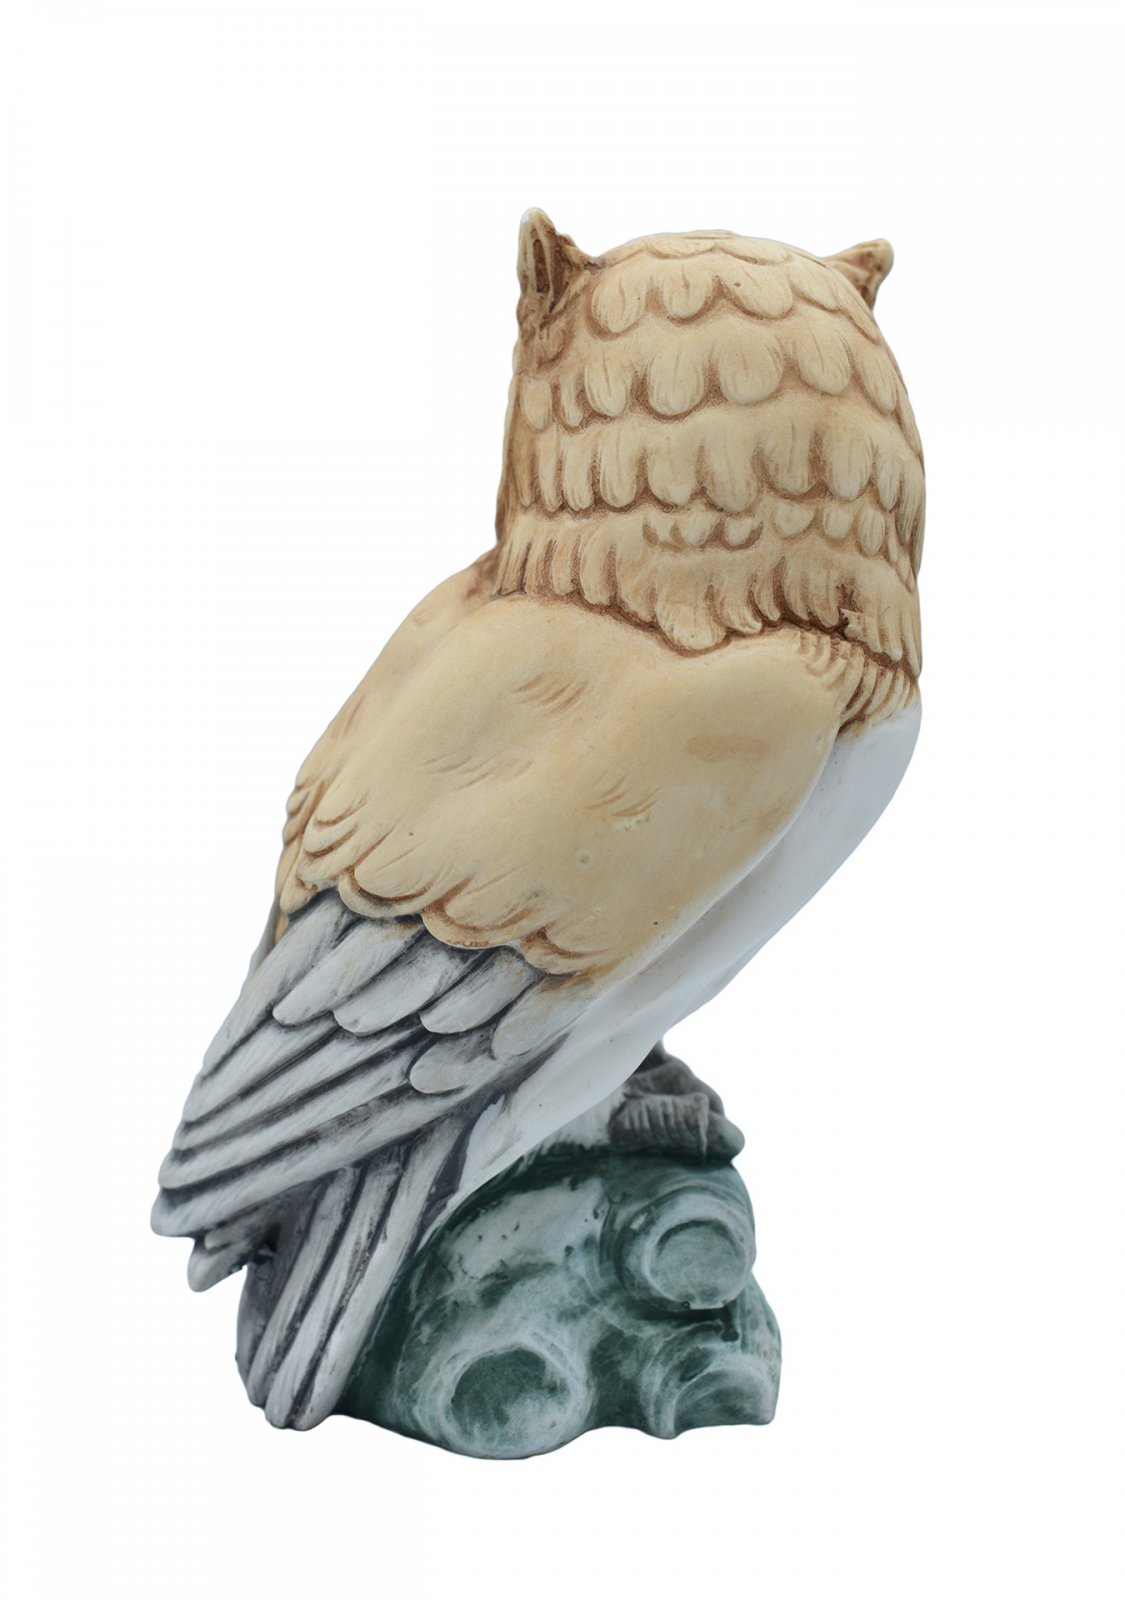 Owl medium alabaster statue with color, the symbol of wisdom